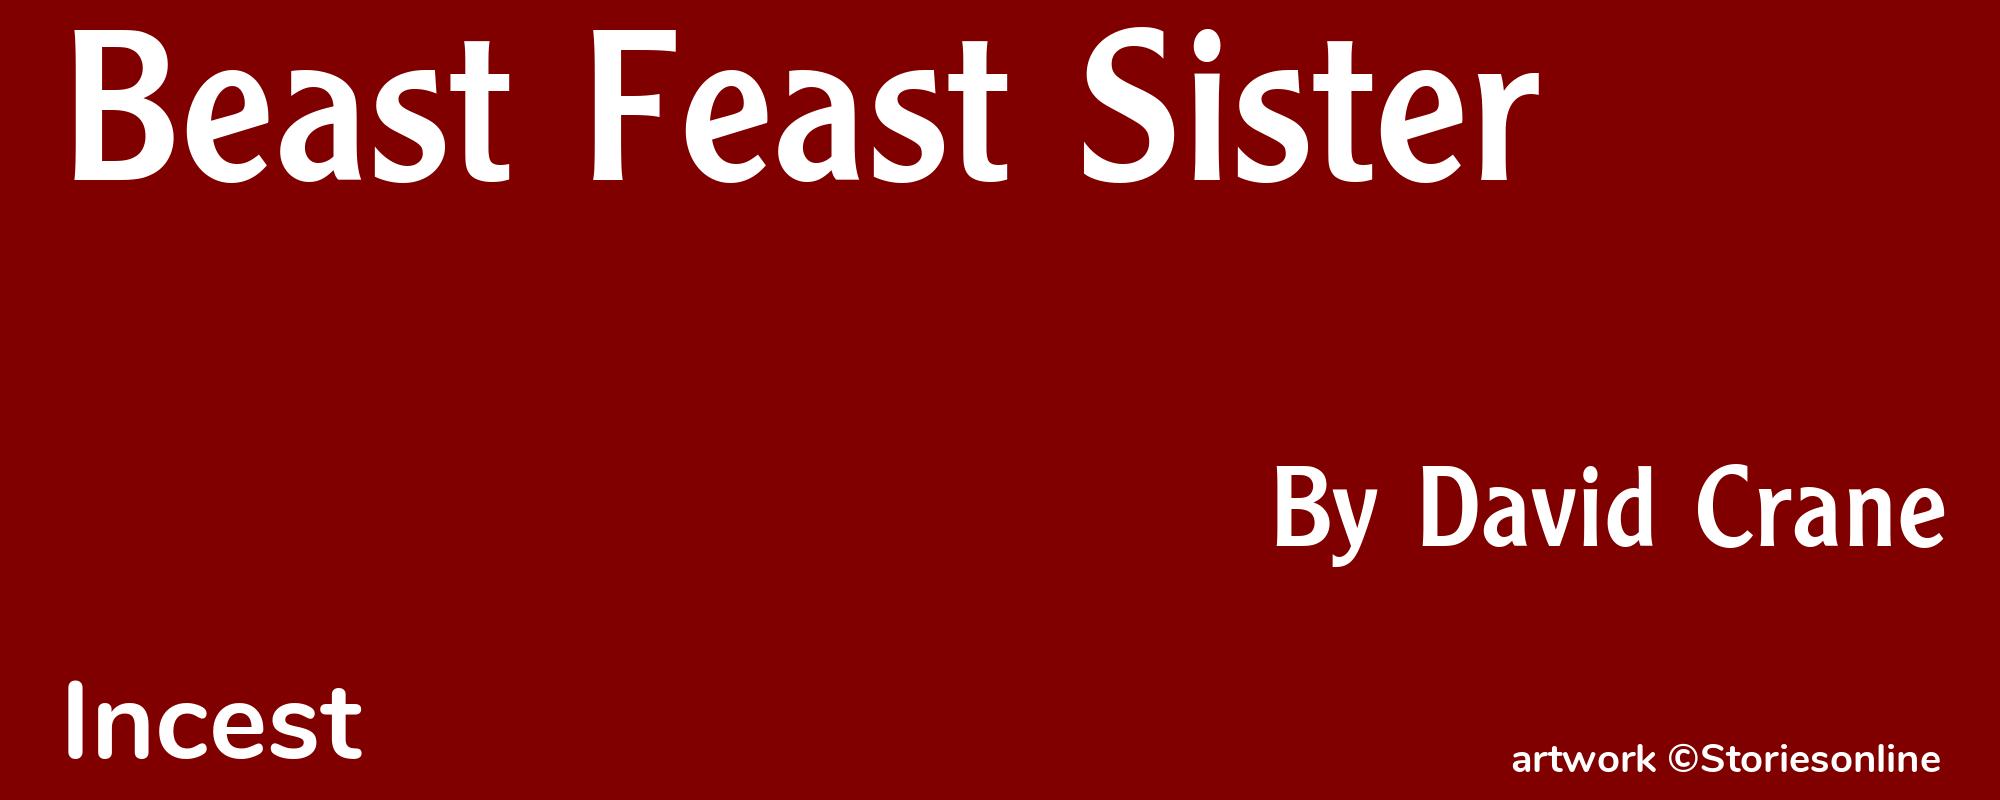 Beast Feast Sister - Cover